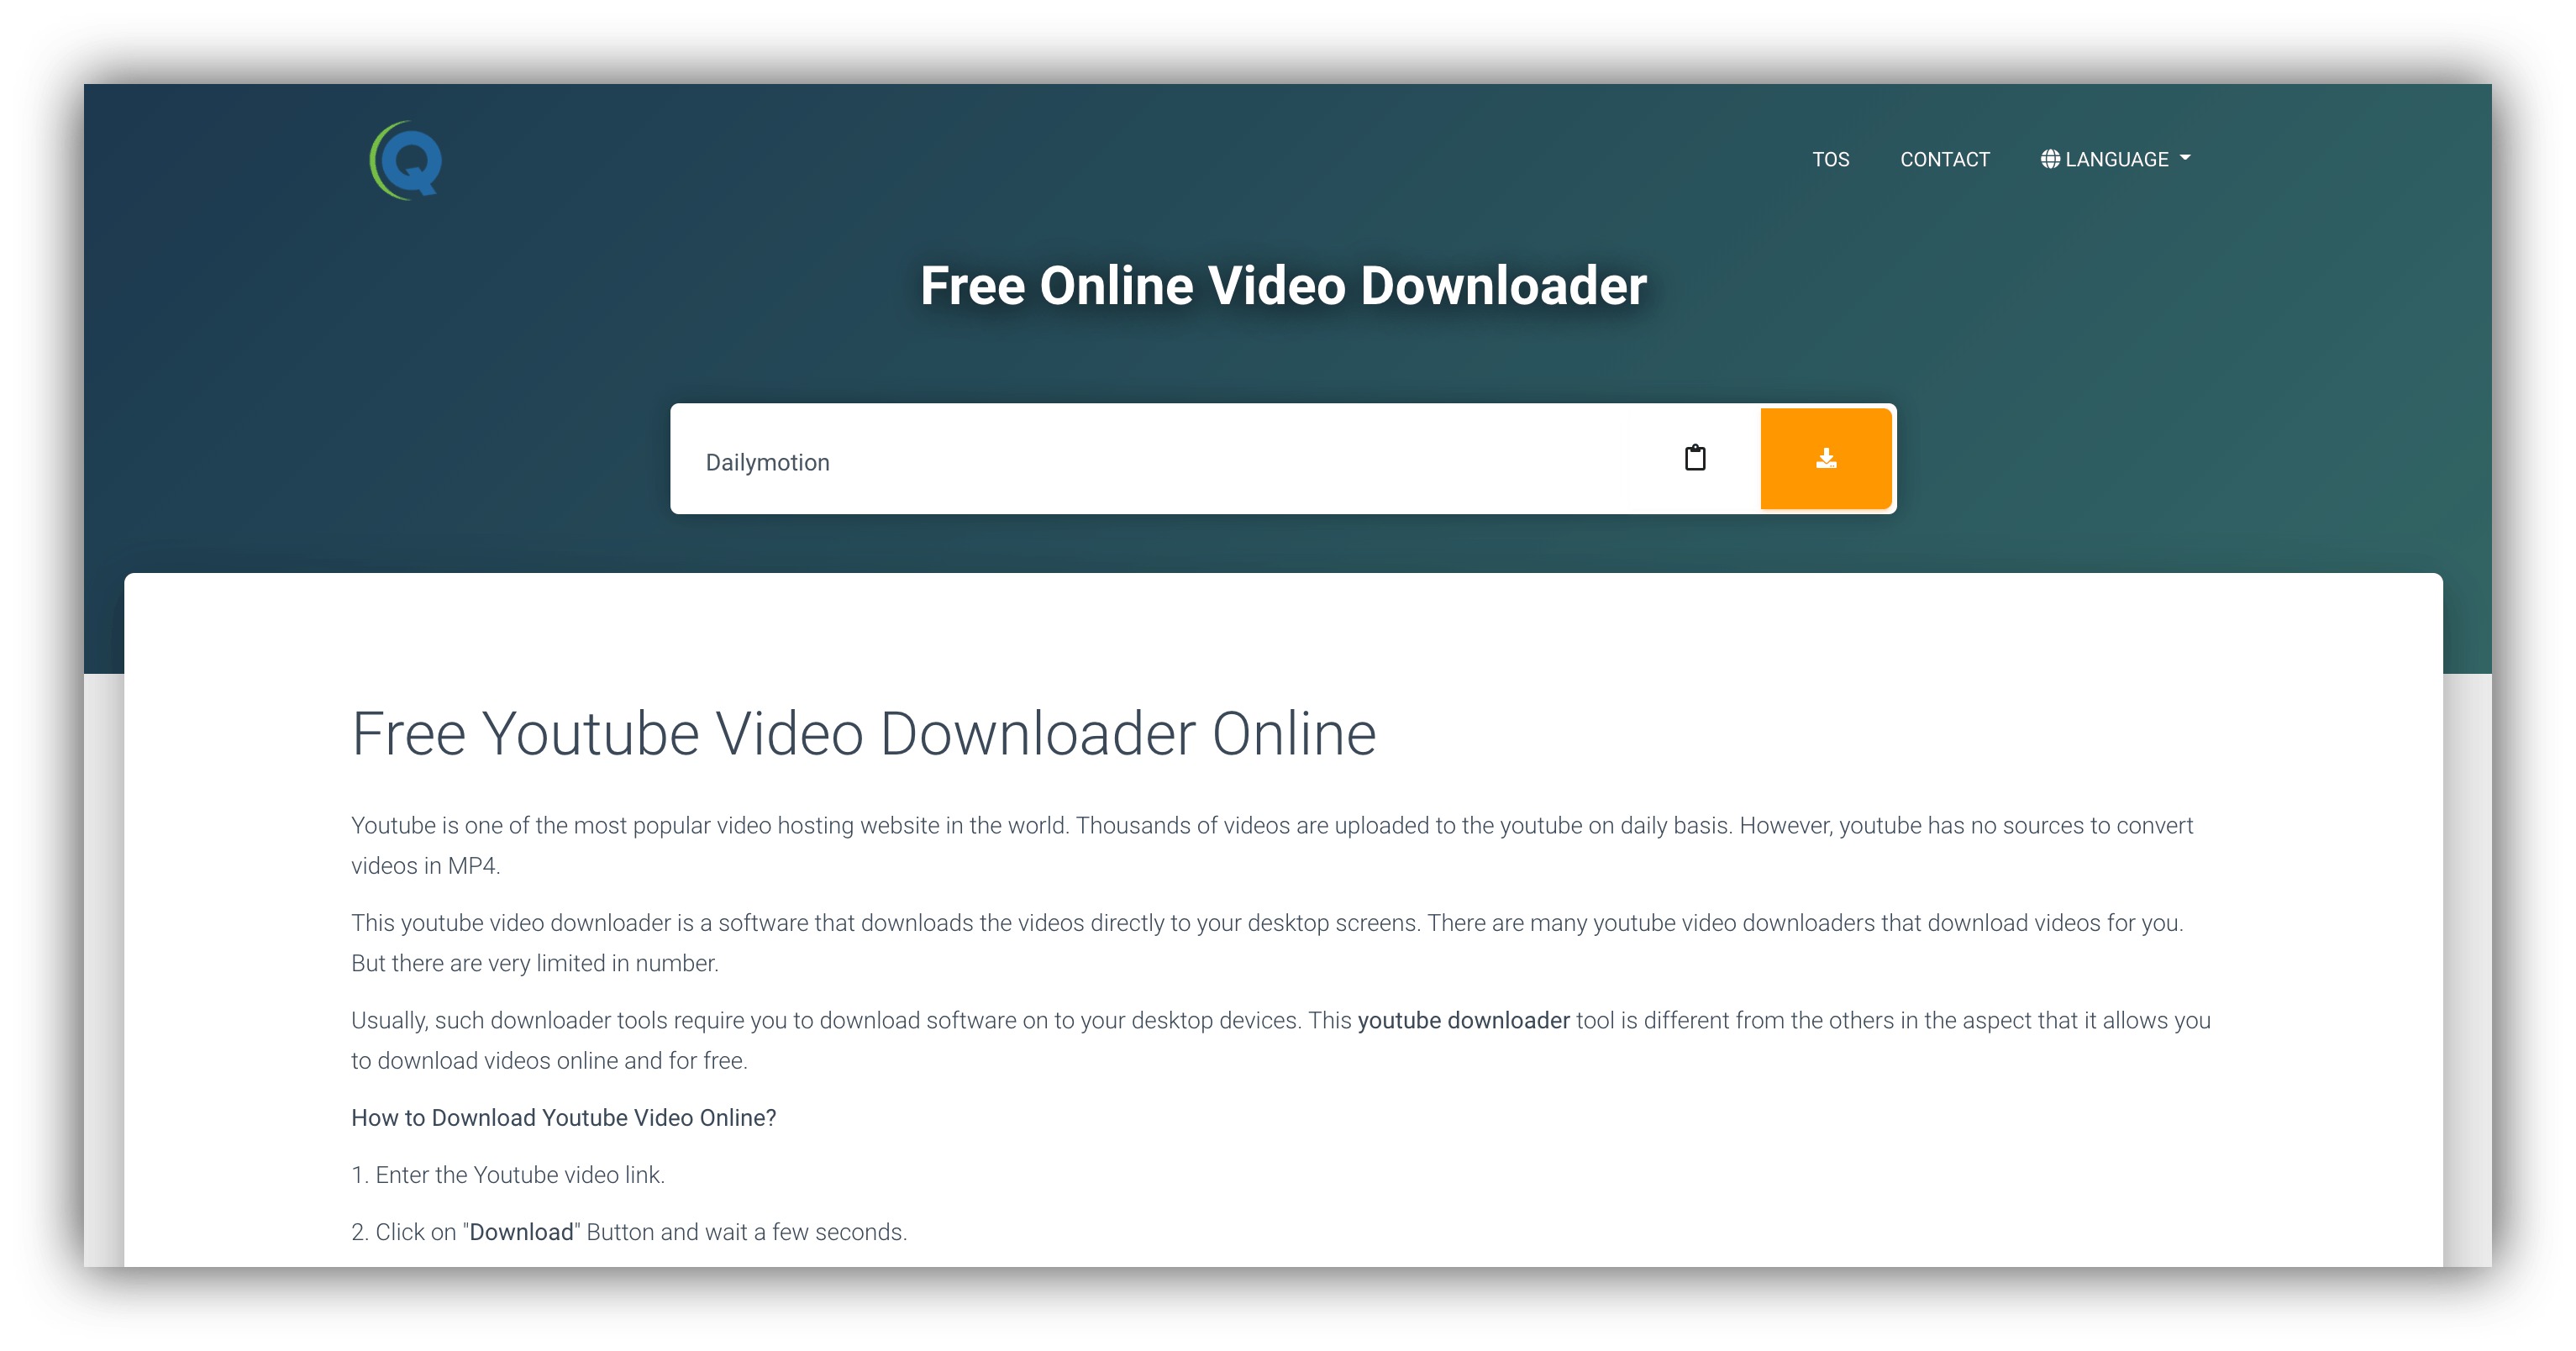 qvideodownloader homepage